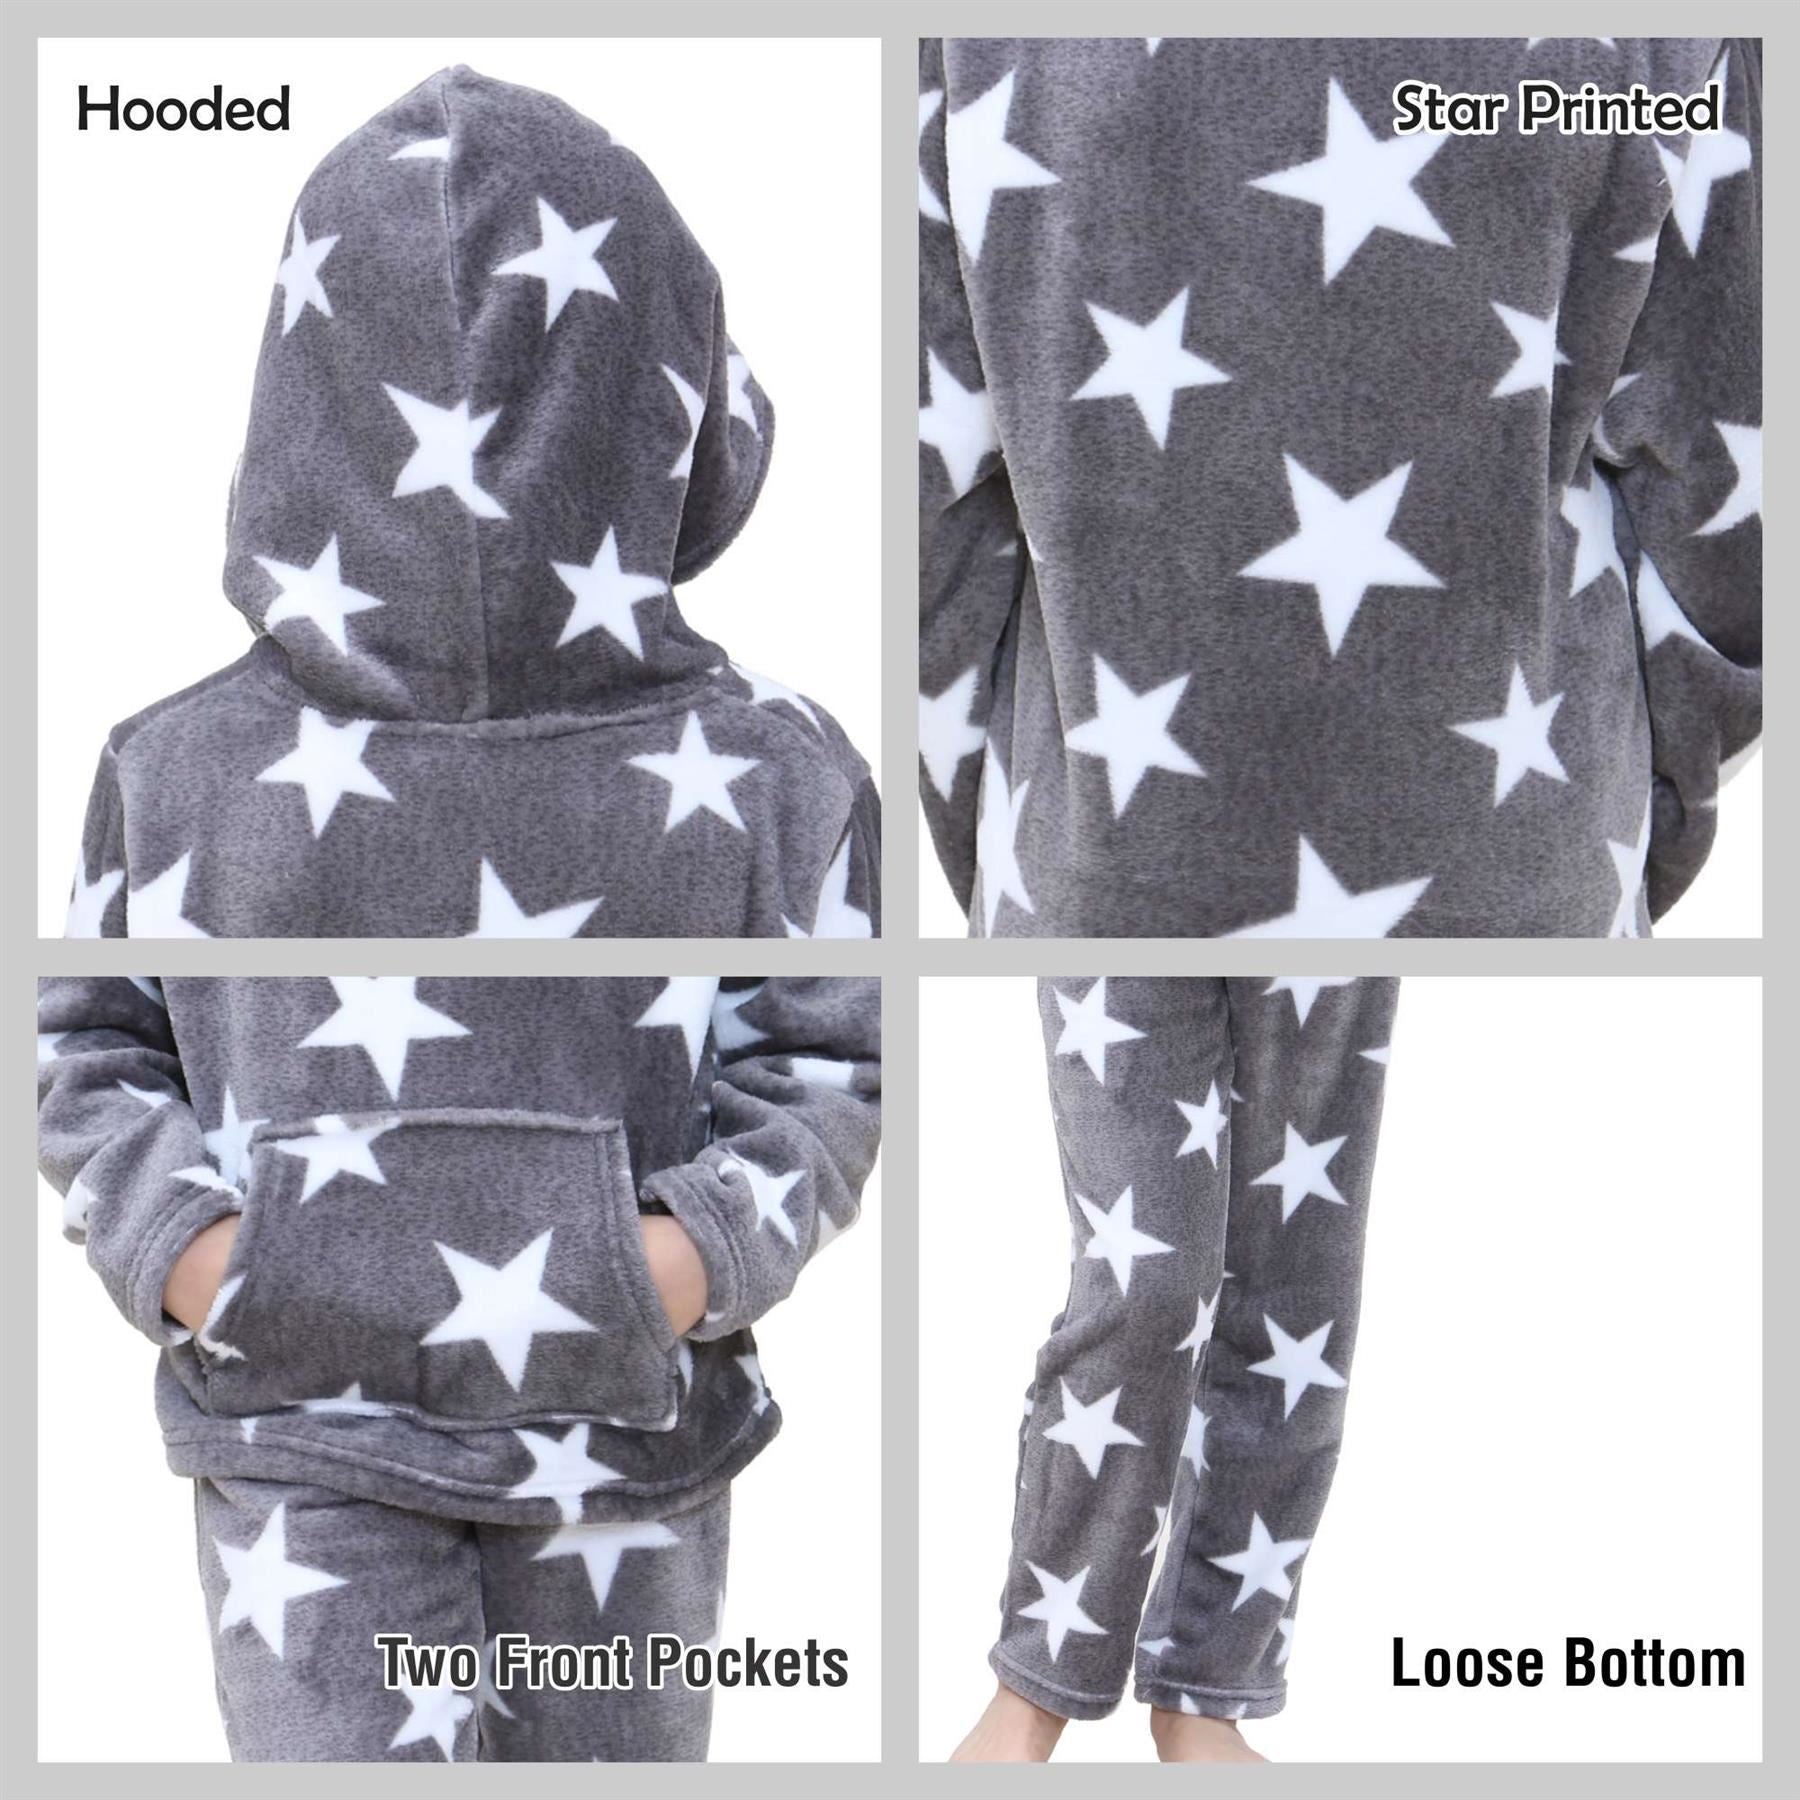 Kids Girls Stars Print Pyjama Extra Soft Flannel Fleece Hooded PJS Set